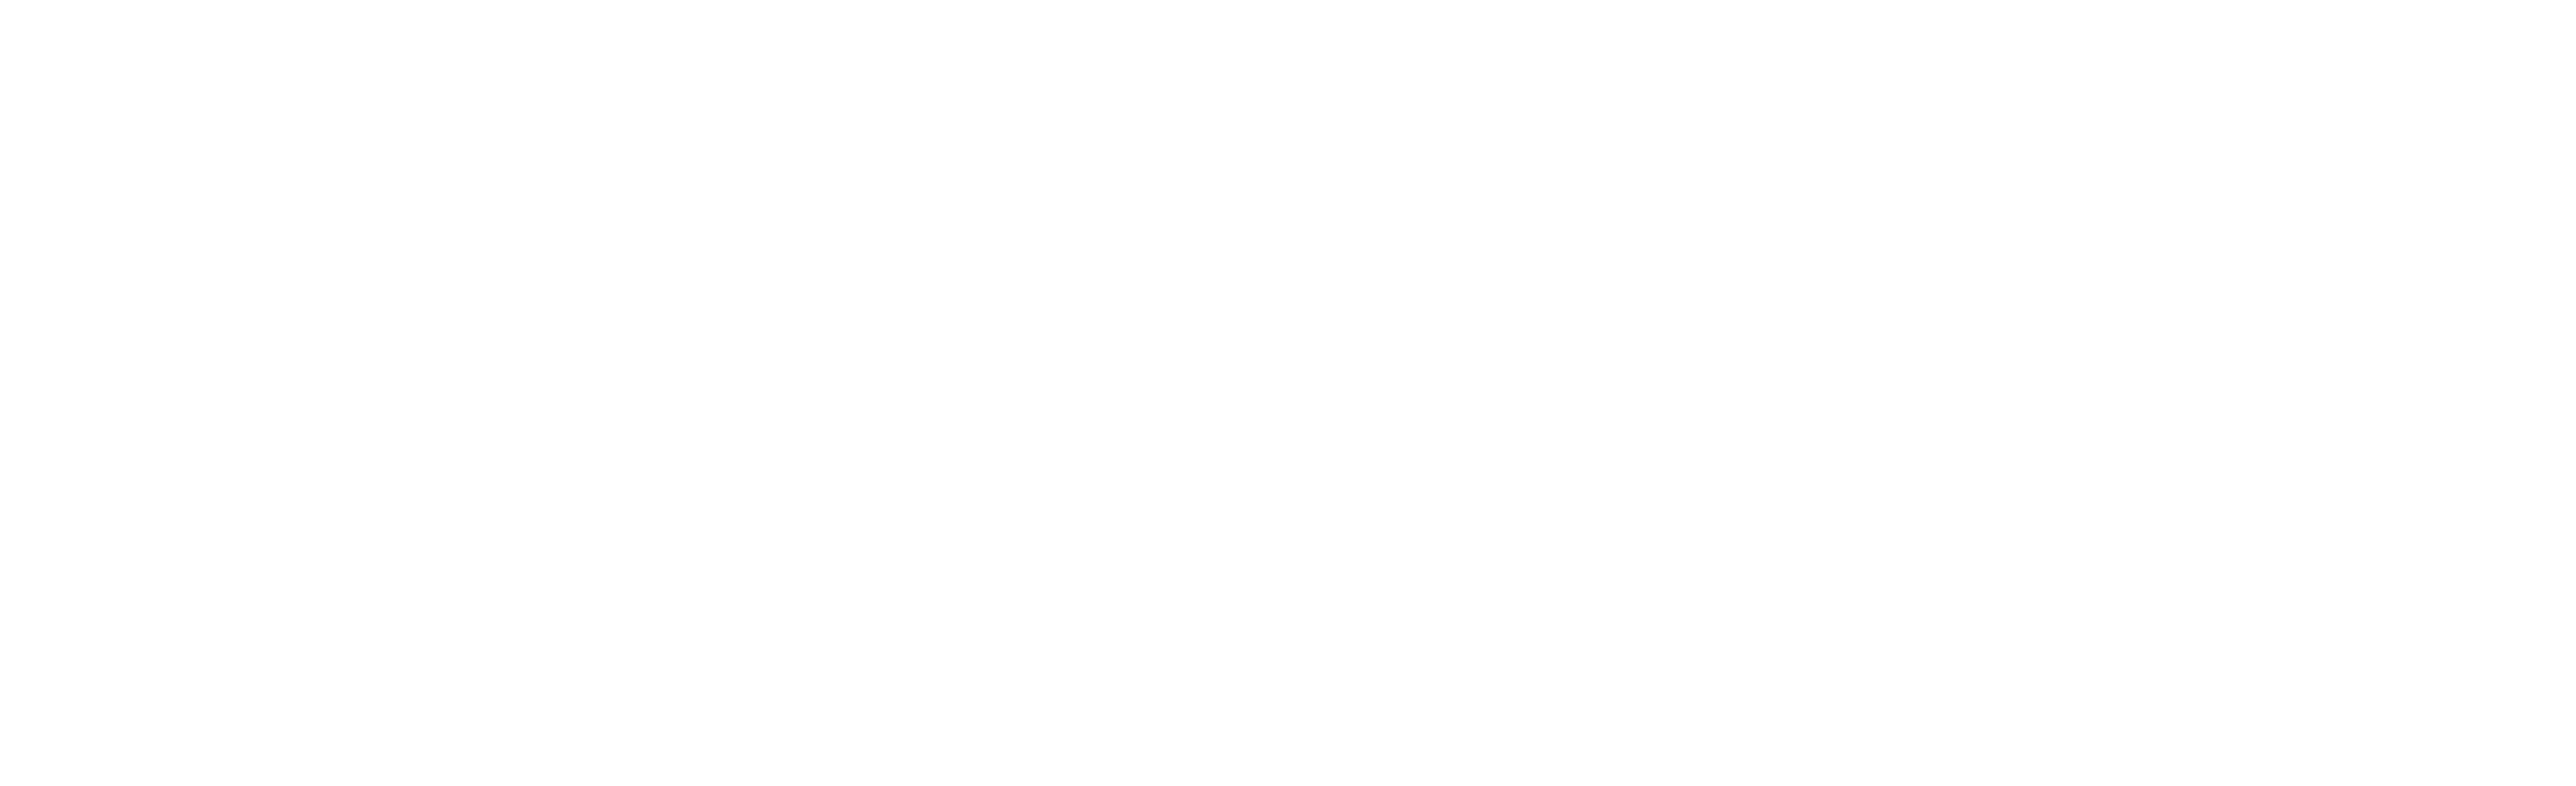 Real Estate Riot